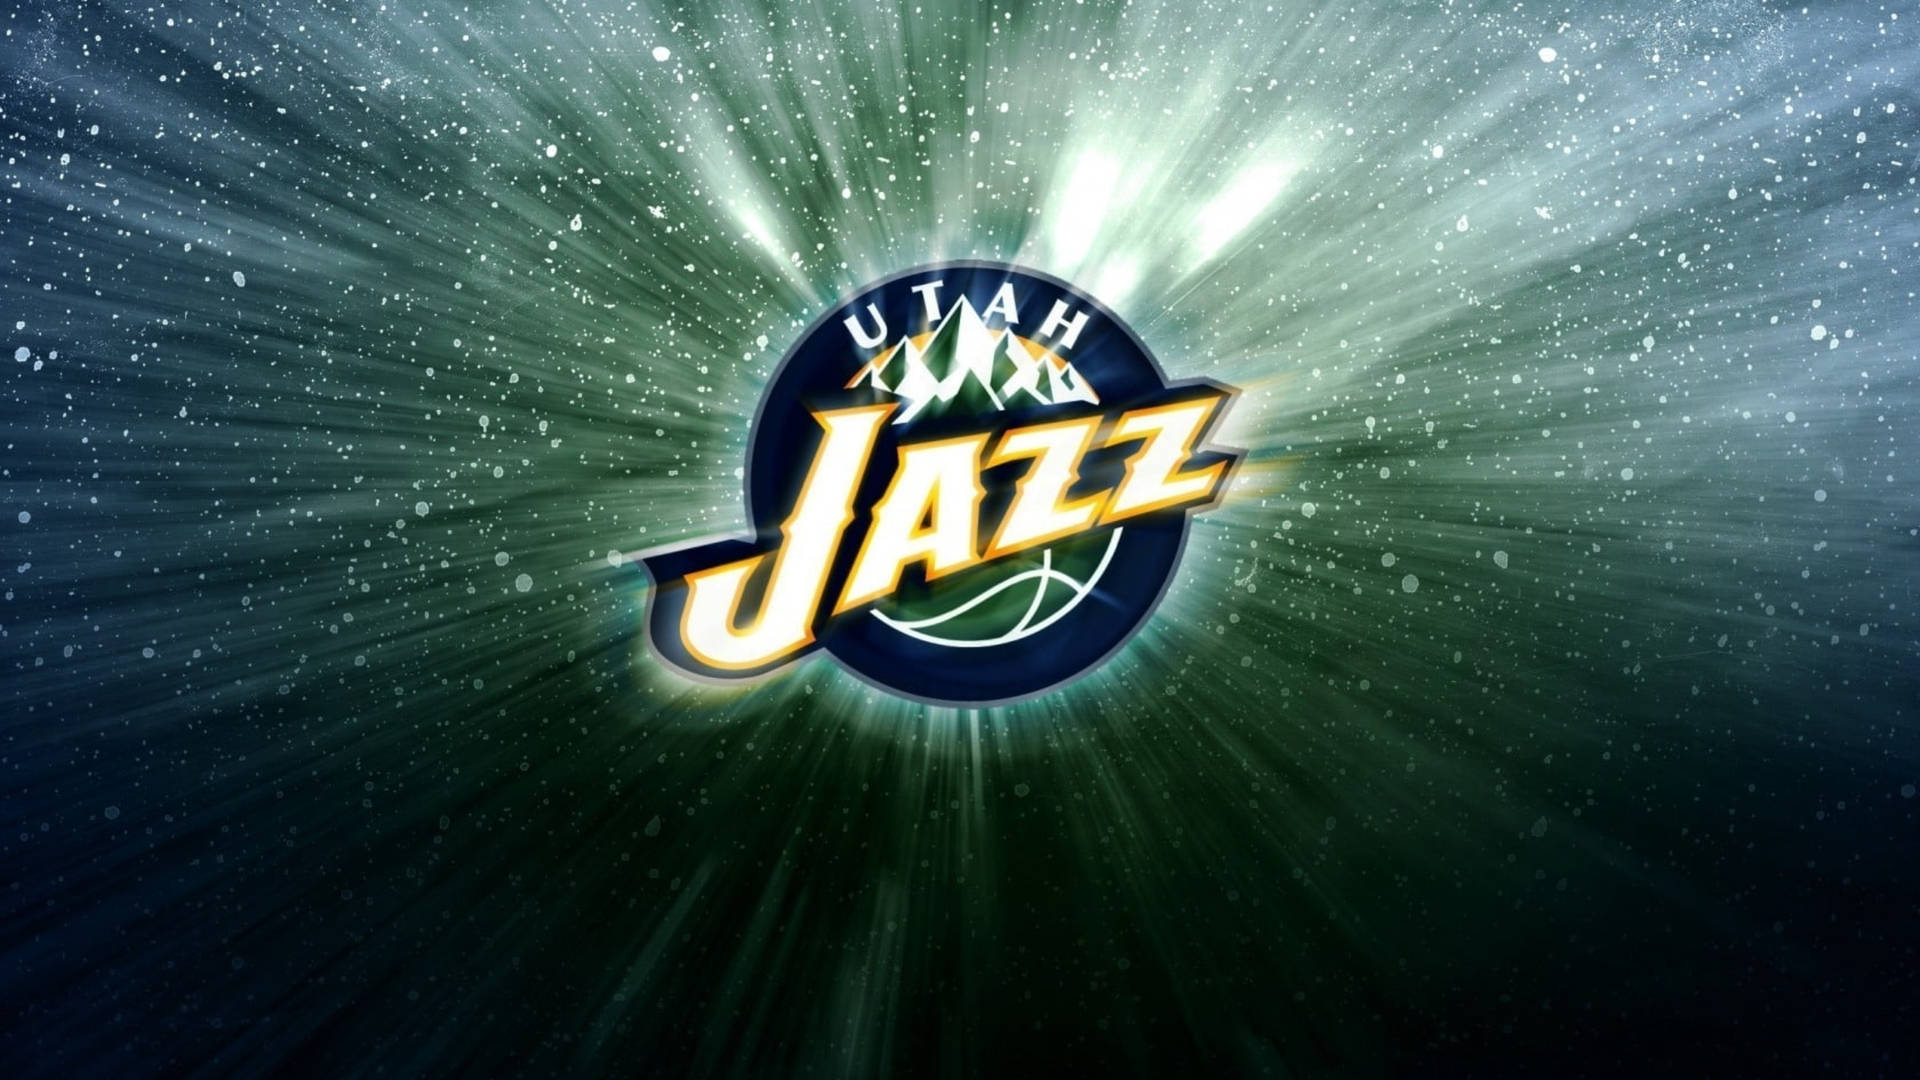 Utah Jazz Logo With Snow Background